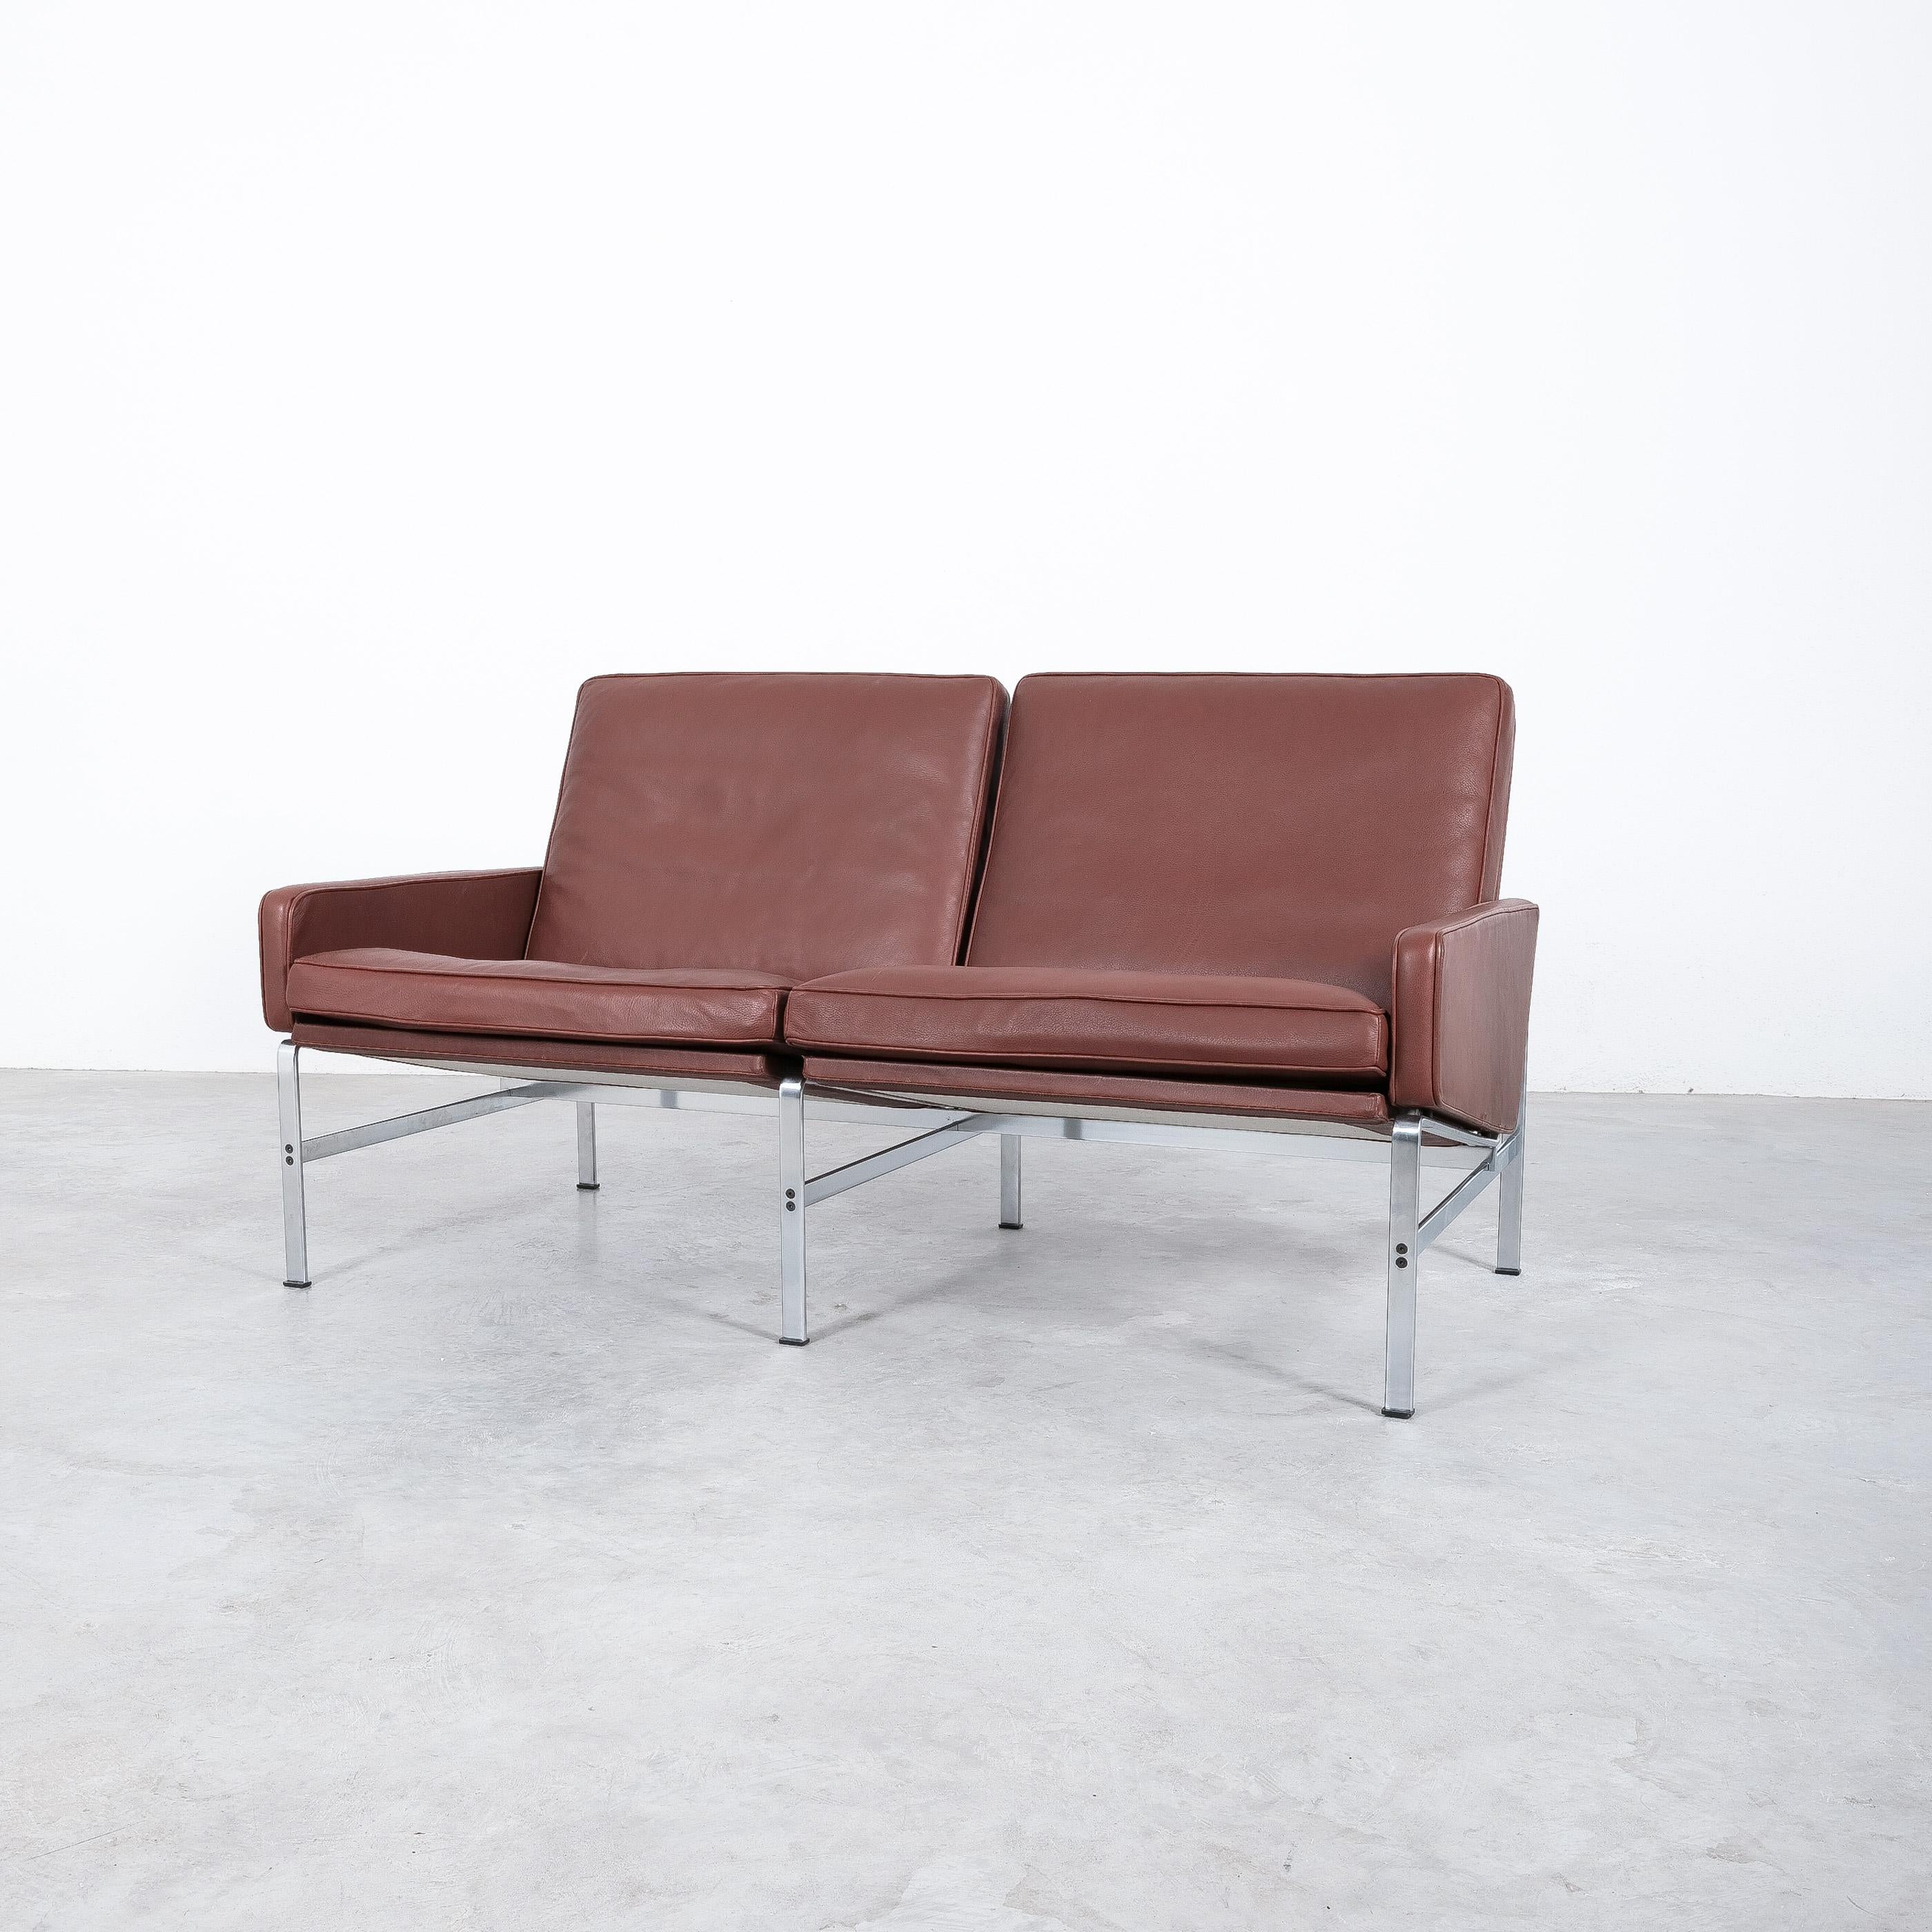 Fabricius & Kastholm Small Lounge Sofa FK 6720 Steel Leather Kill International For Sale 1